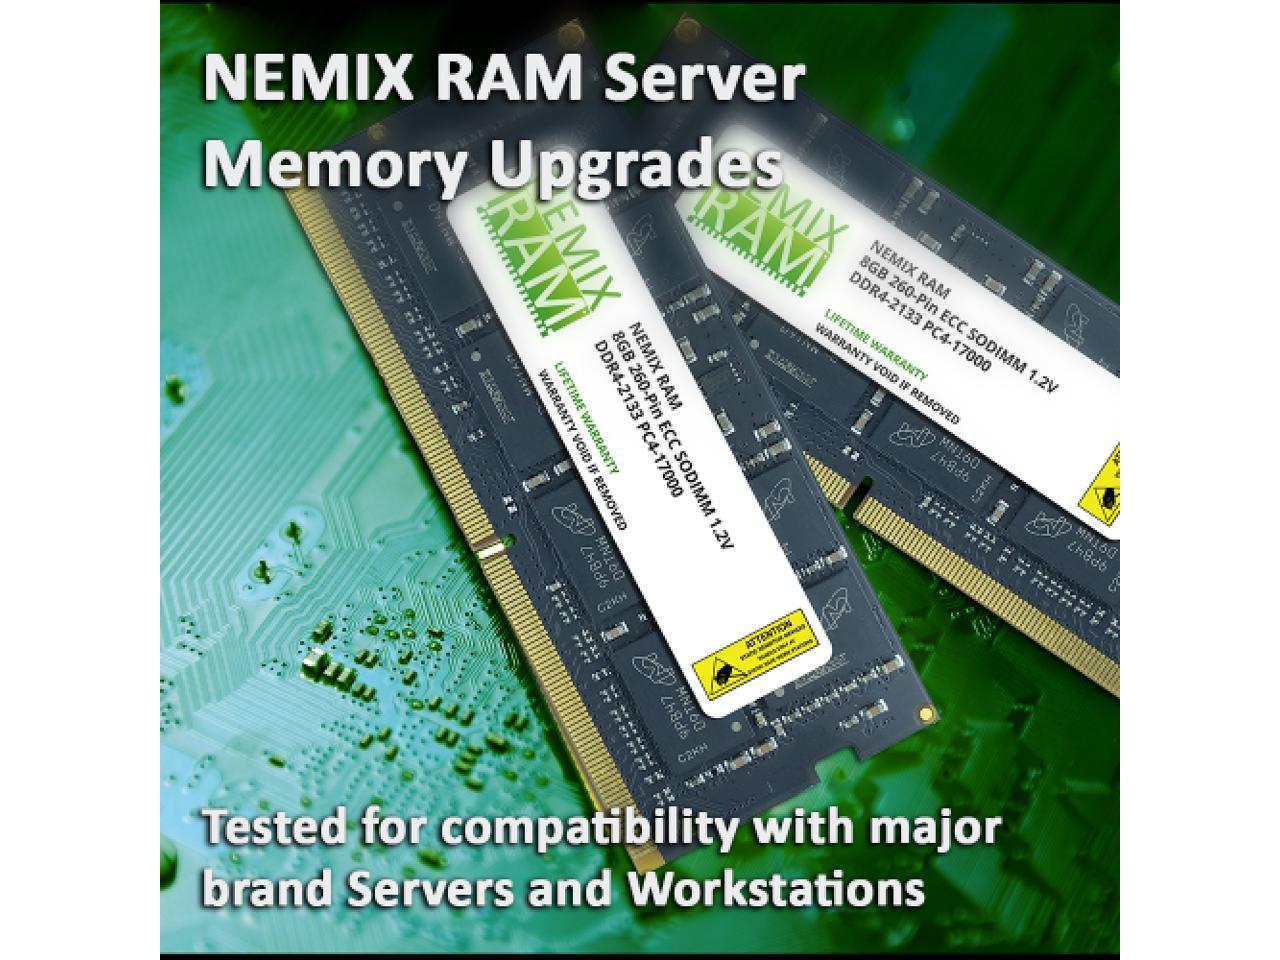 32GB Kit 2 x 16GB DDR4-2933 PC4-23400 ECC Sodimm 2Rx8 Memory by Nemix Ram